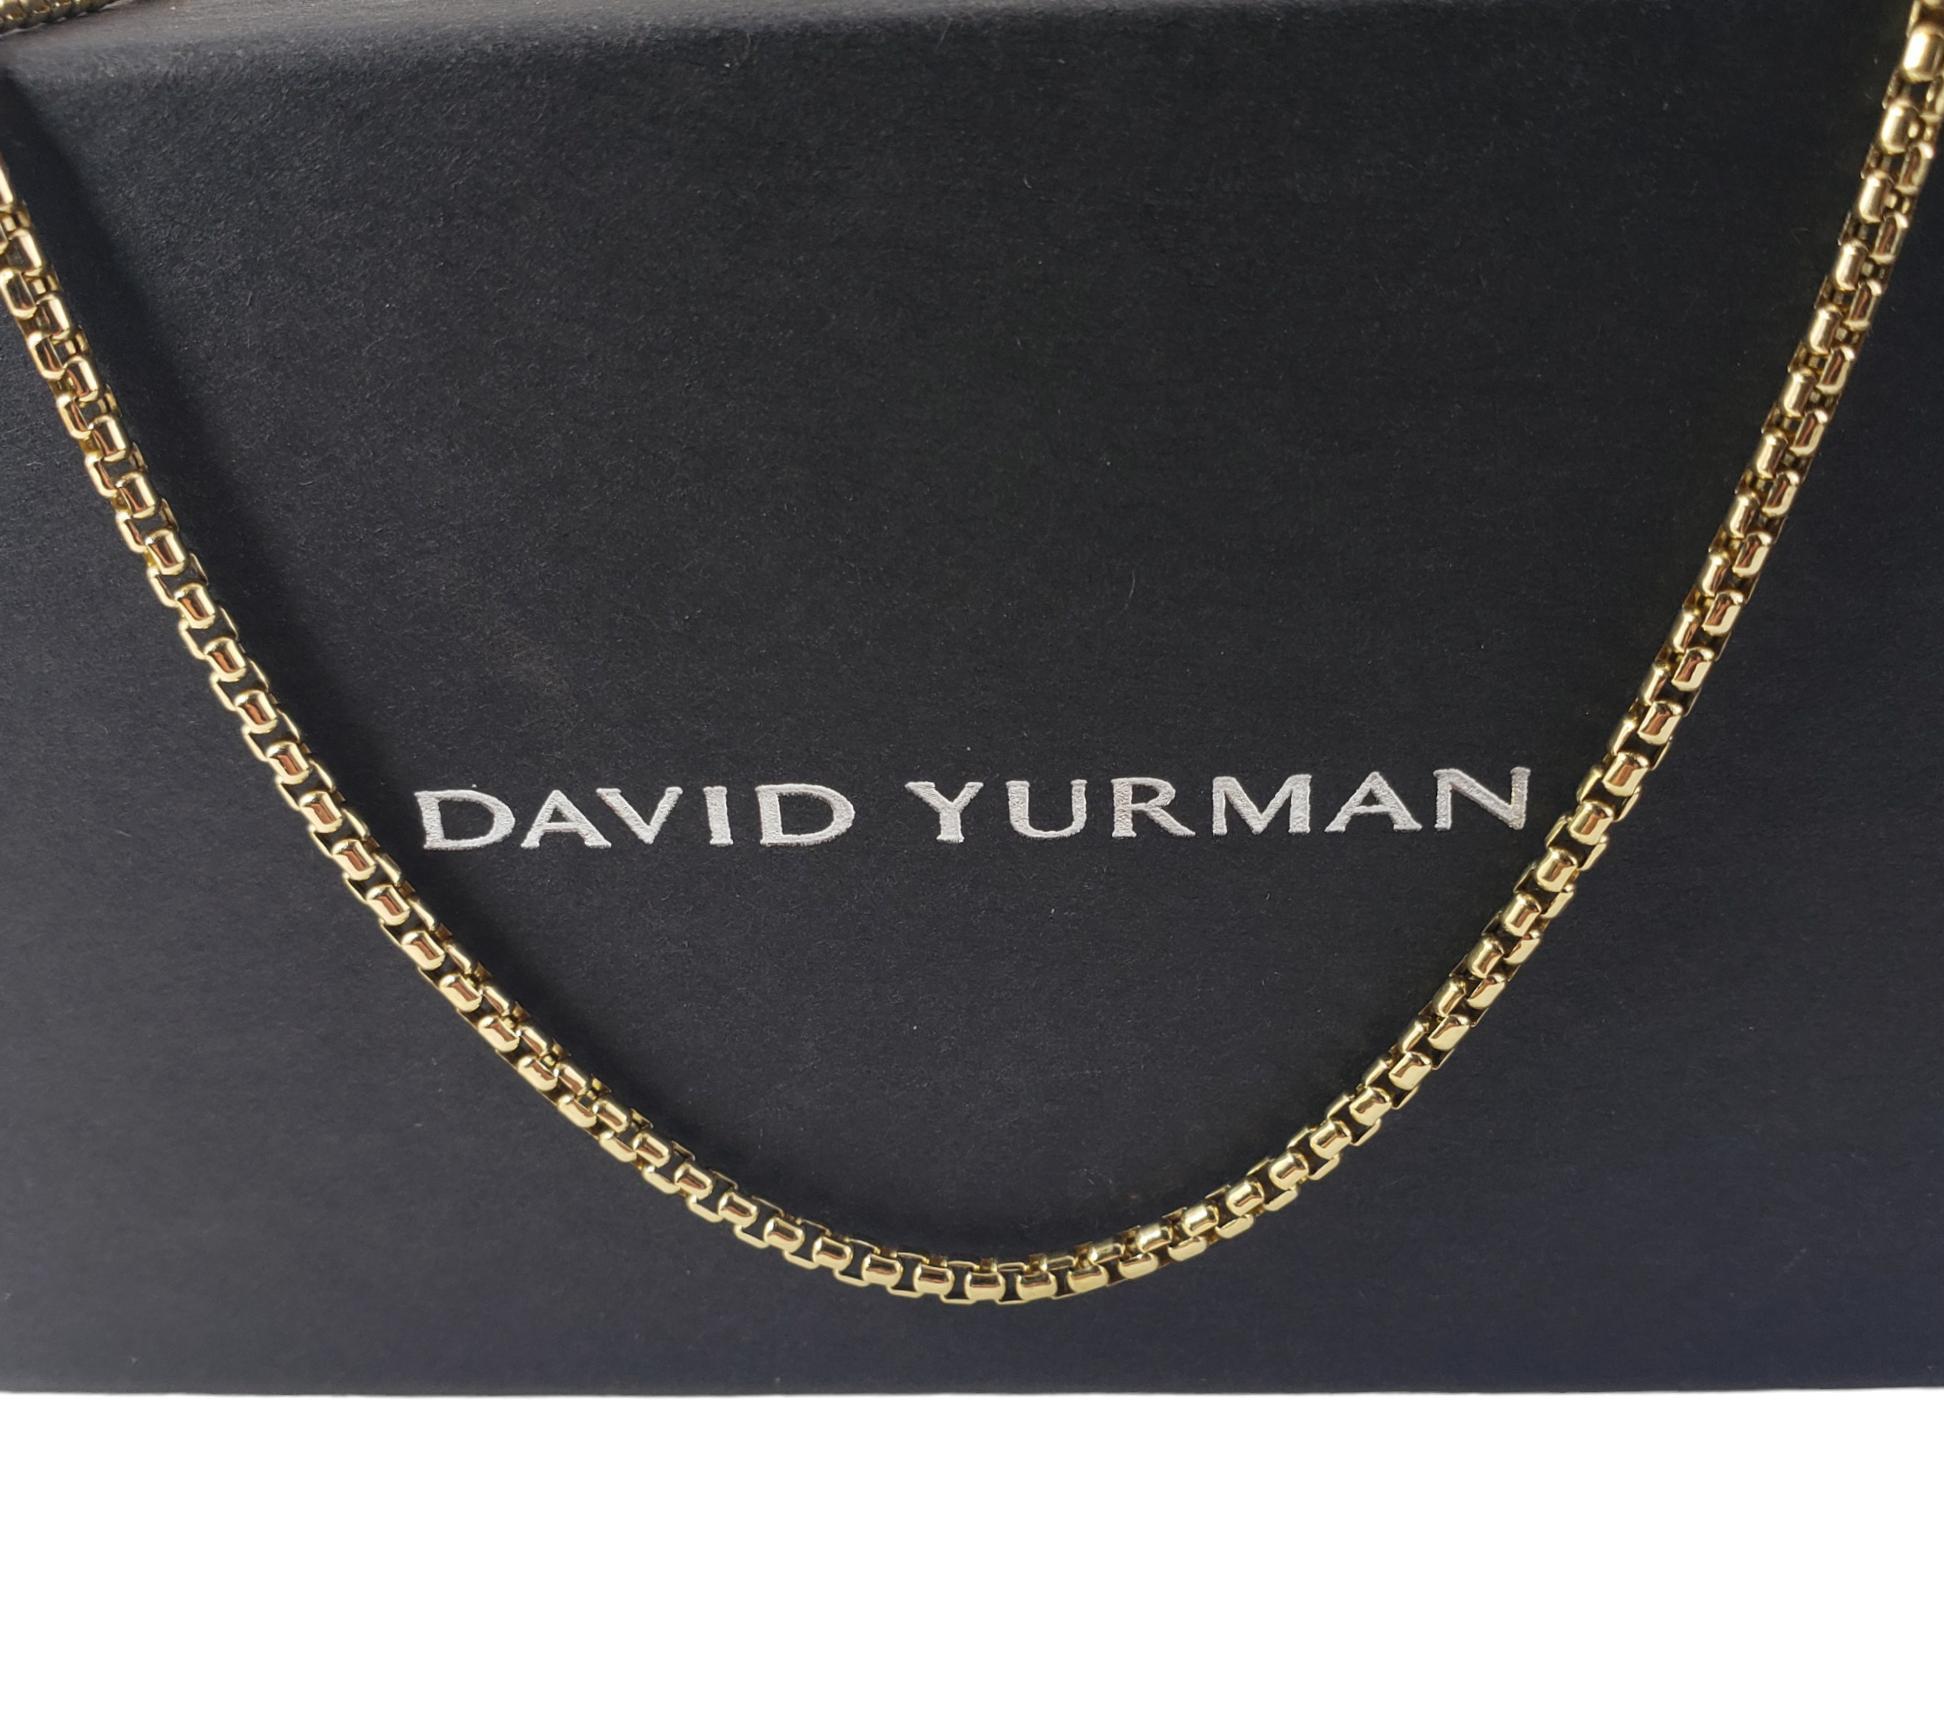 David Yurman 18K Yellow Gold Box Chain Necklace with Box #17356 4